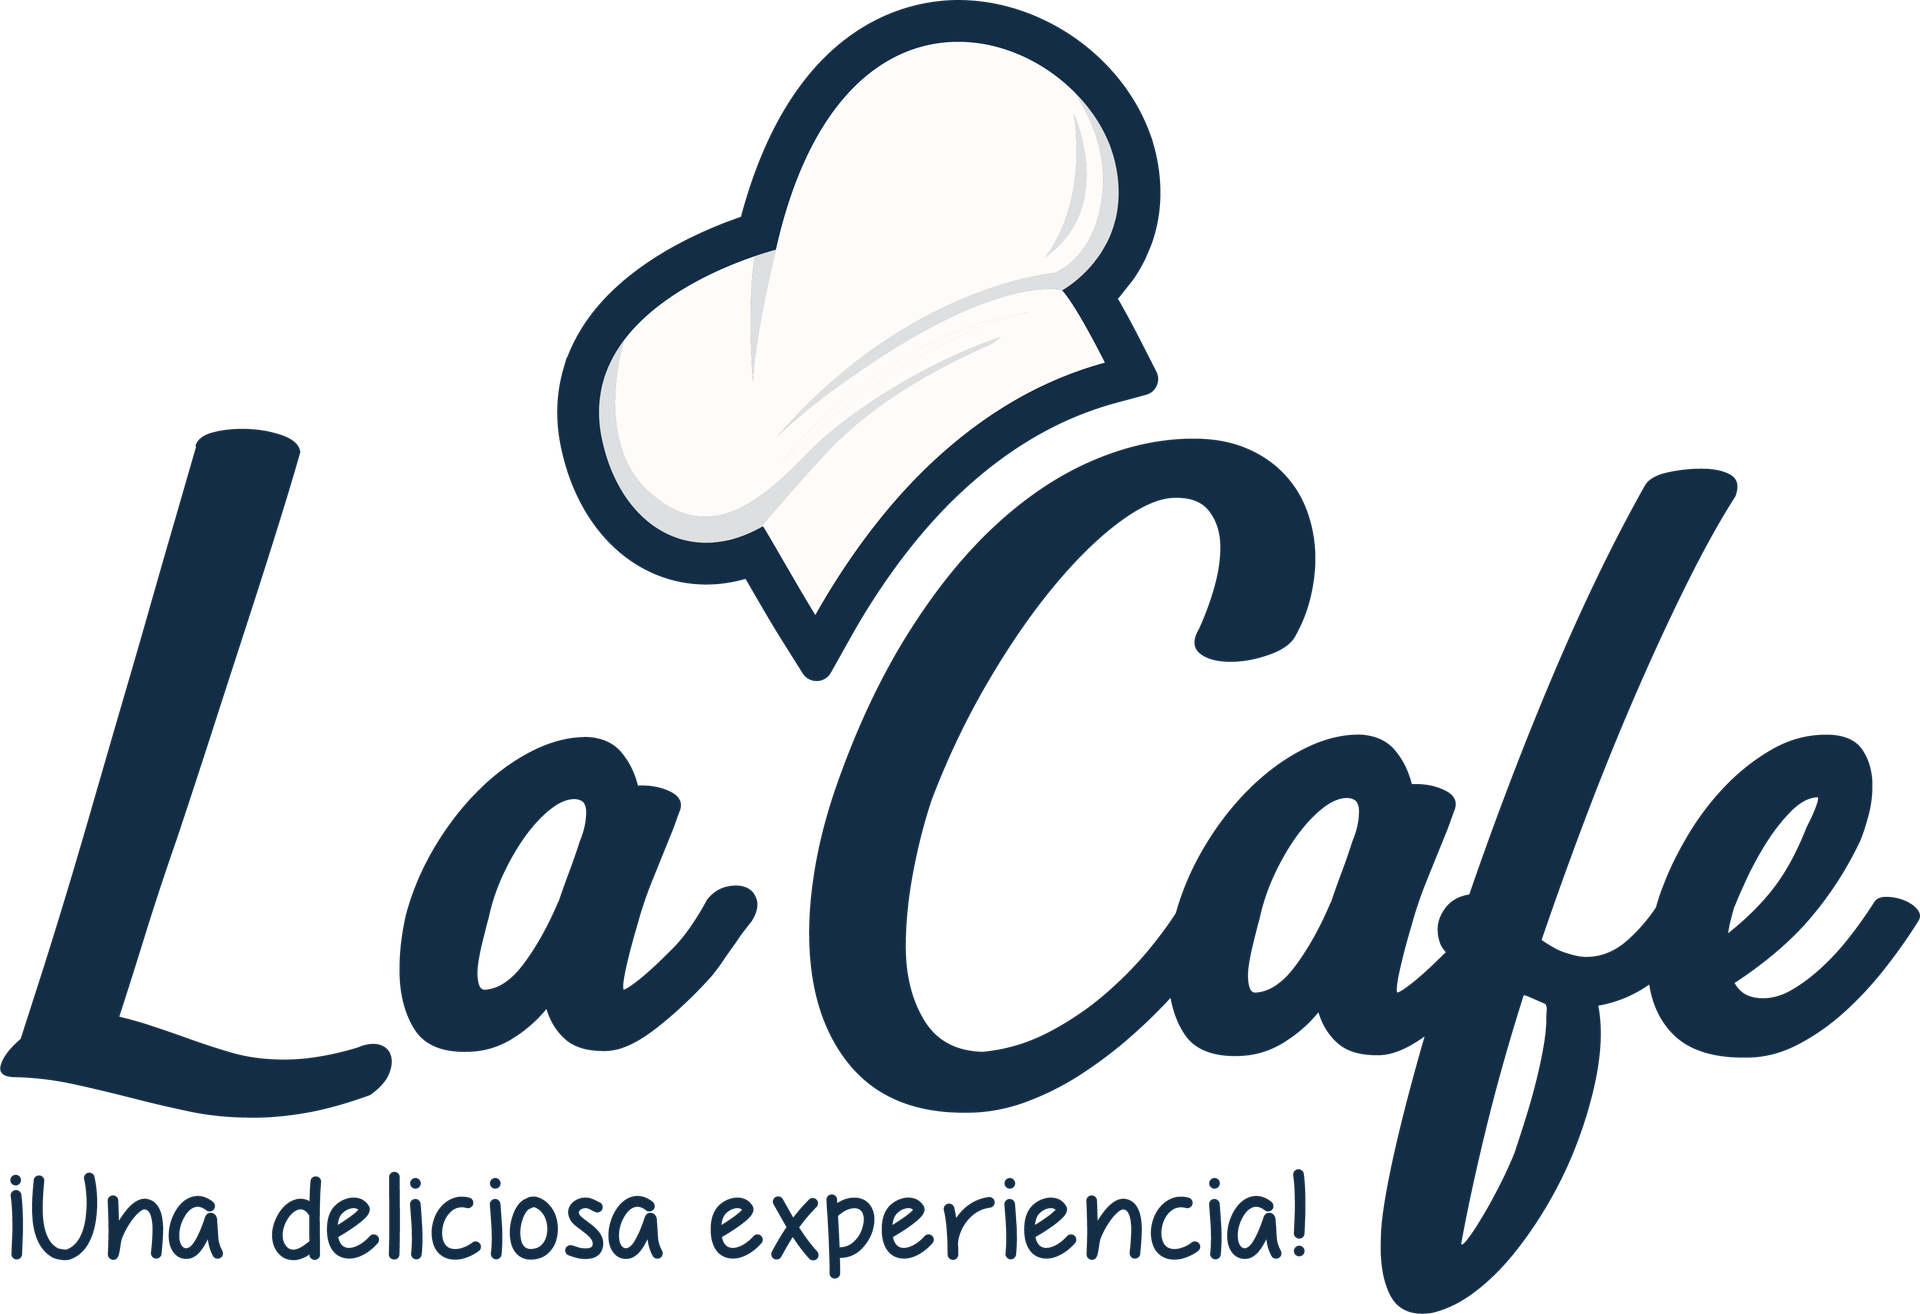 La Cafe